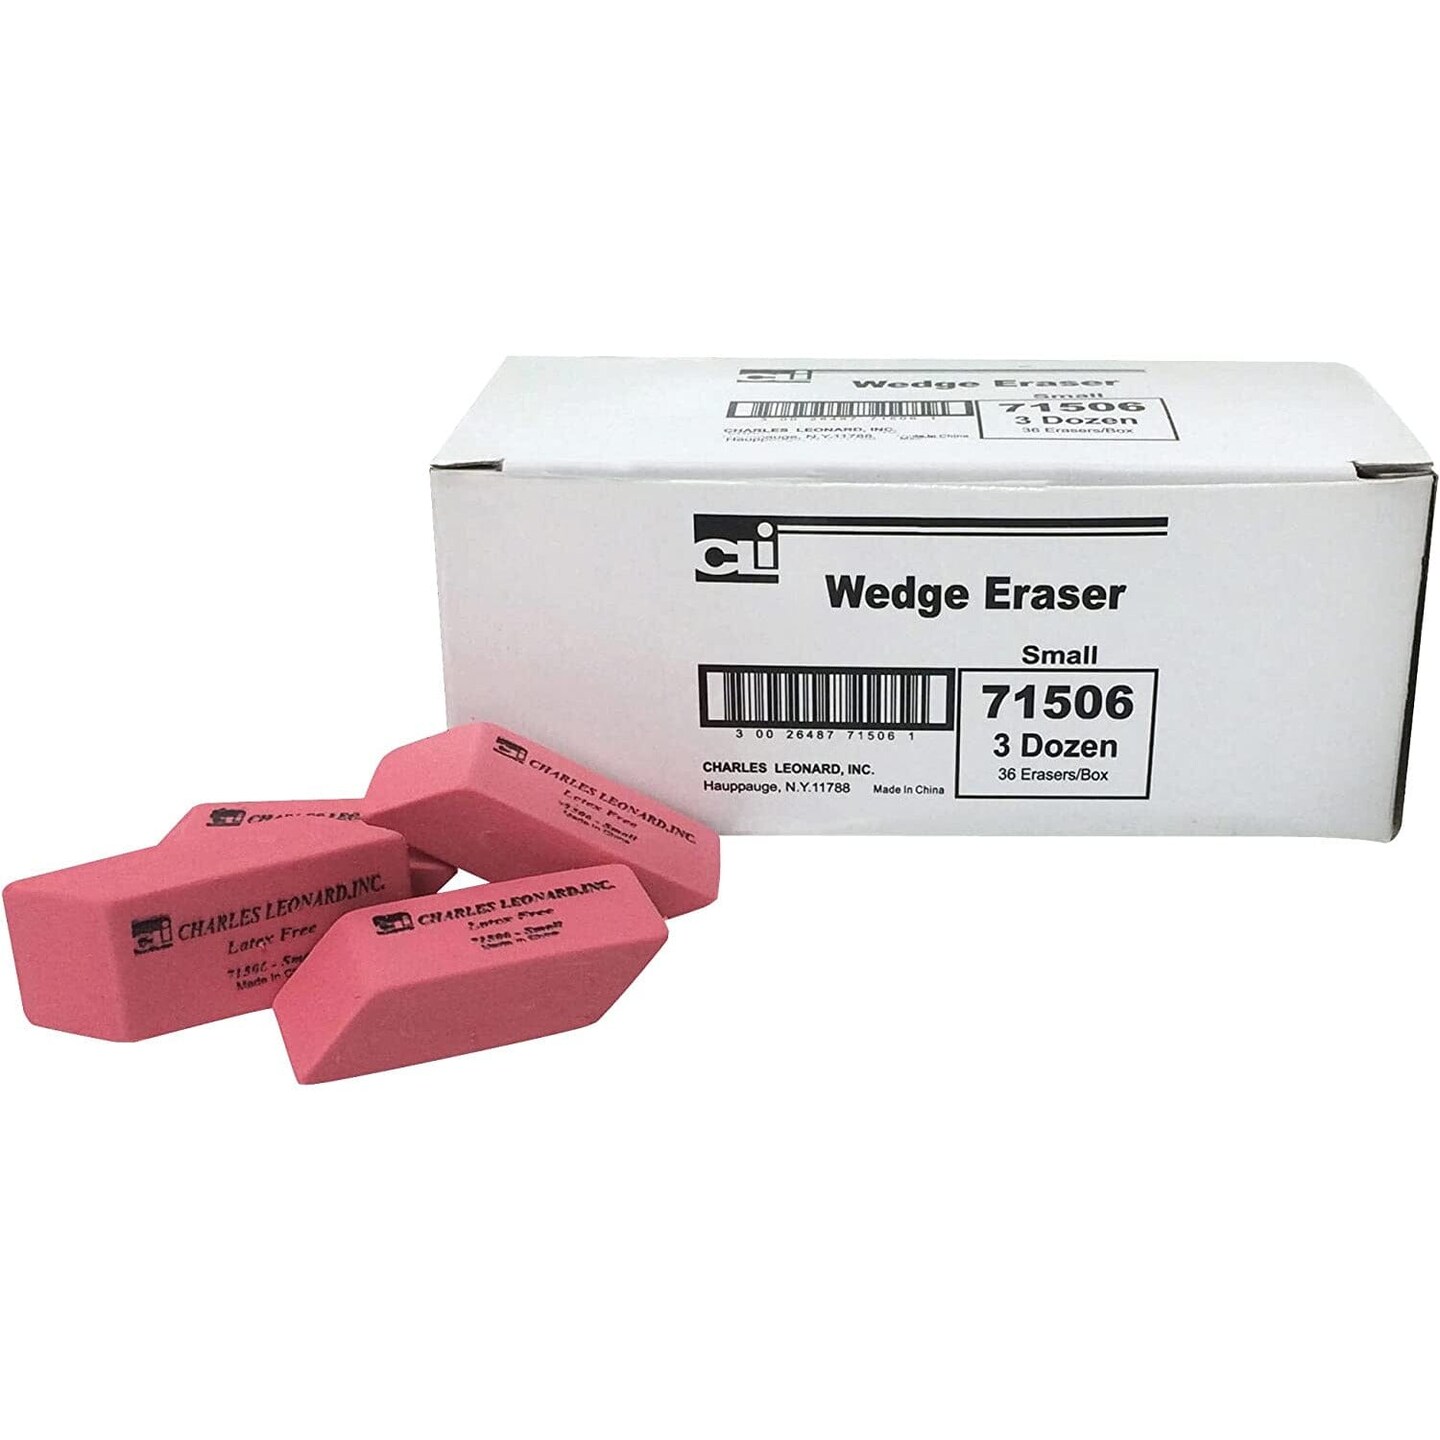 Premier Magic Rub Eraser, Box of 12 - SAN73201BX, Newell Brands  Distribution Llc